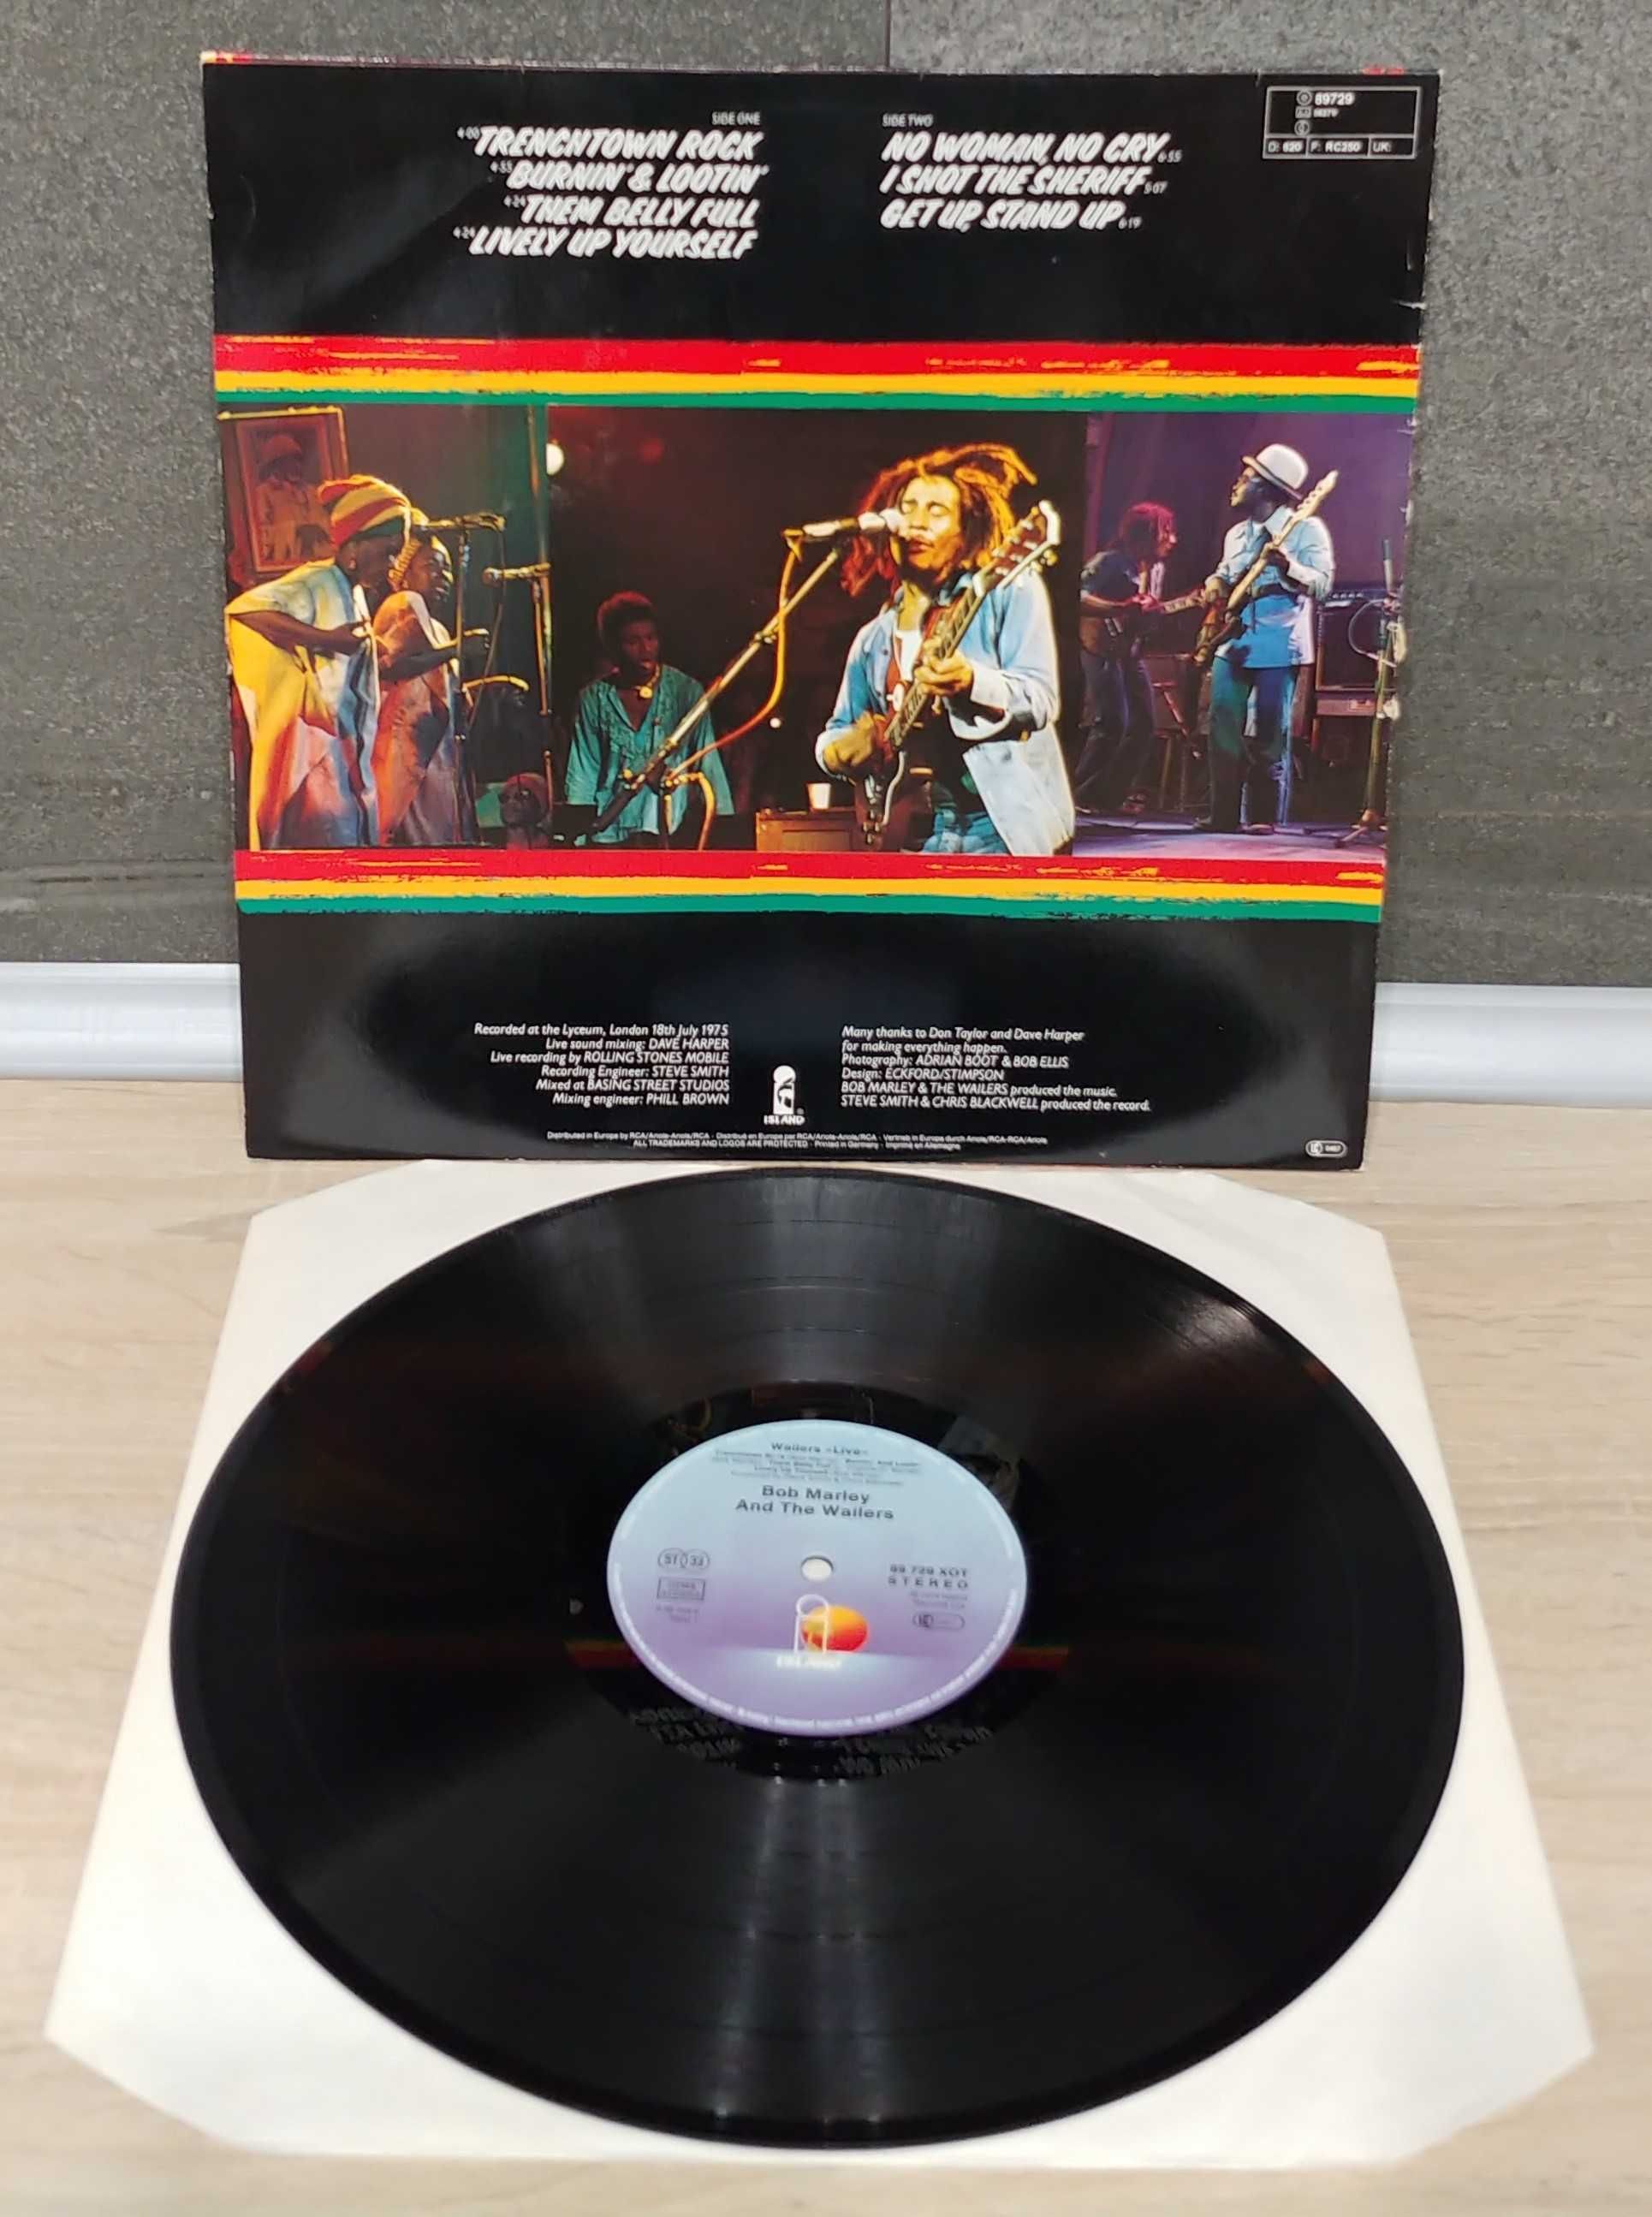 Bob Marley And The Wailers* – Live! Płyta winylowa .